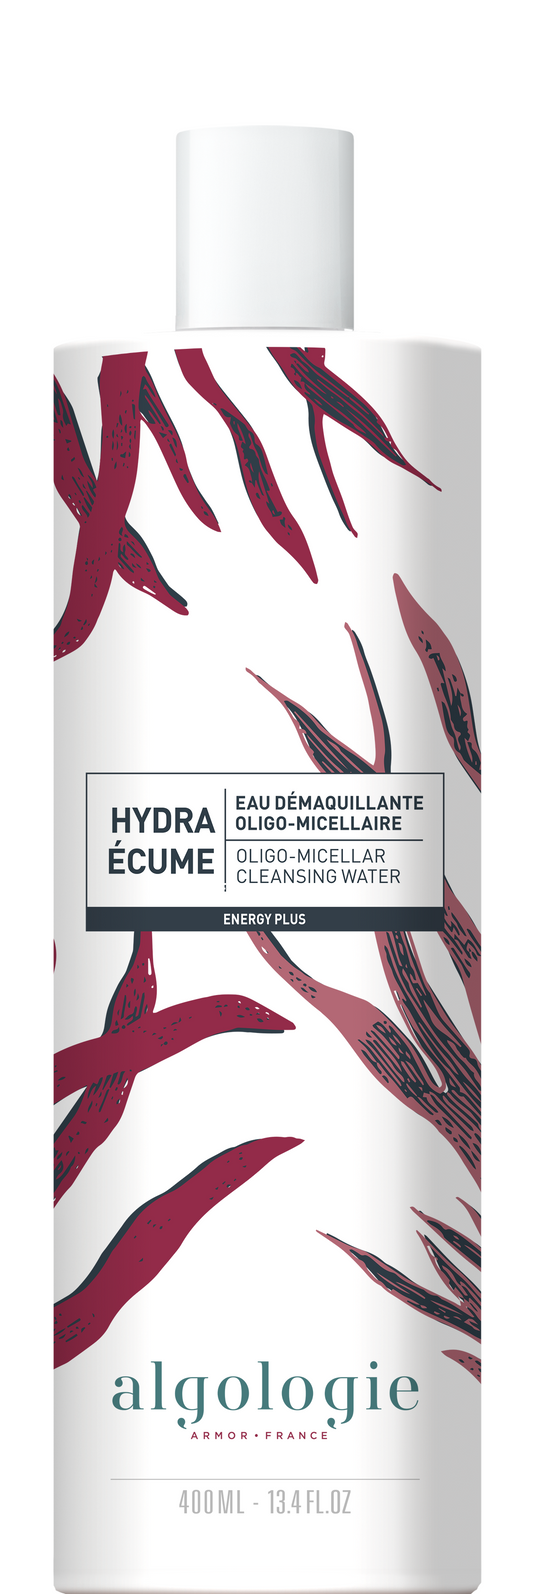 ALGOLOGIE Hydra Écume Oligo-Micellar Makeup Remover Water 400ml